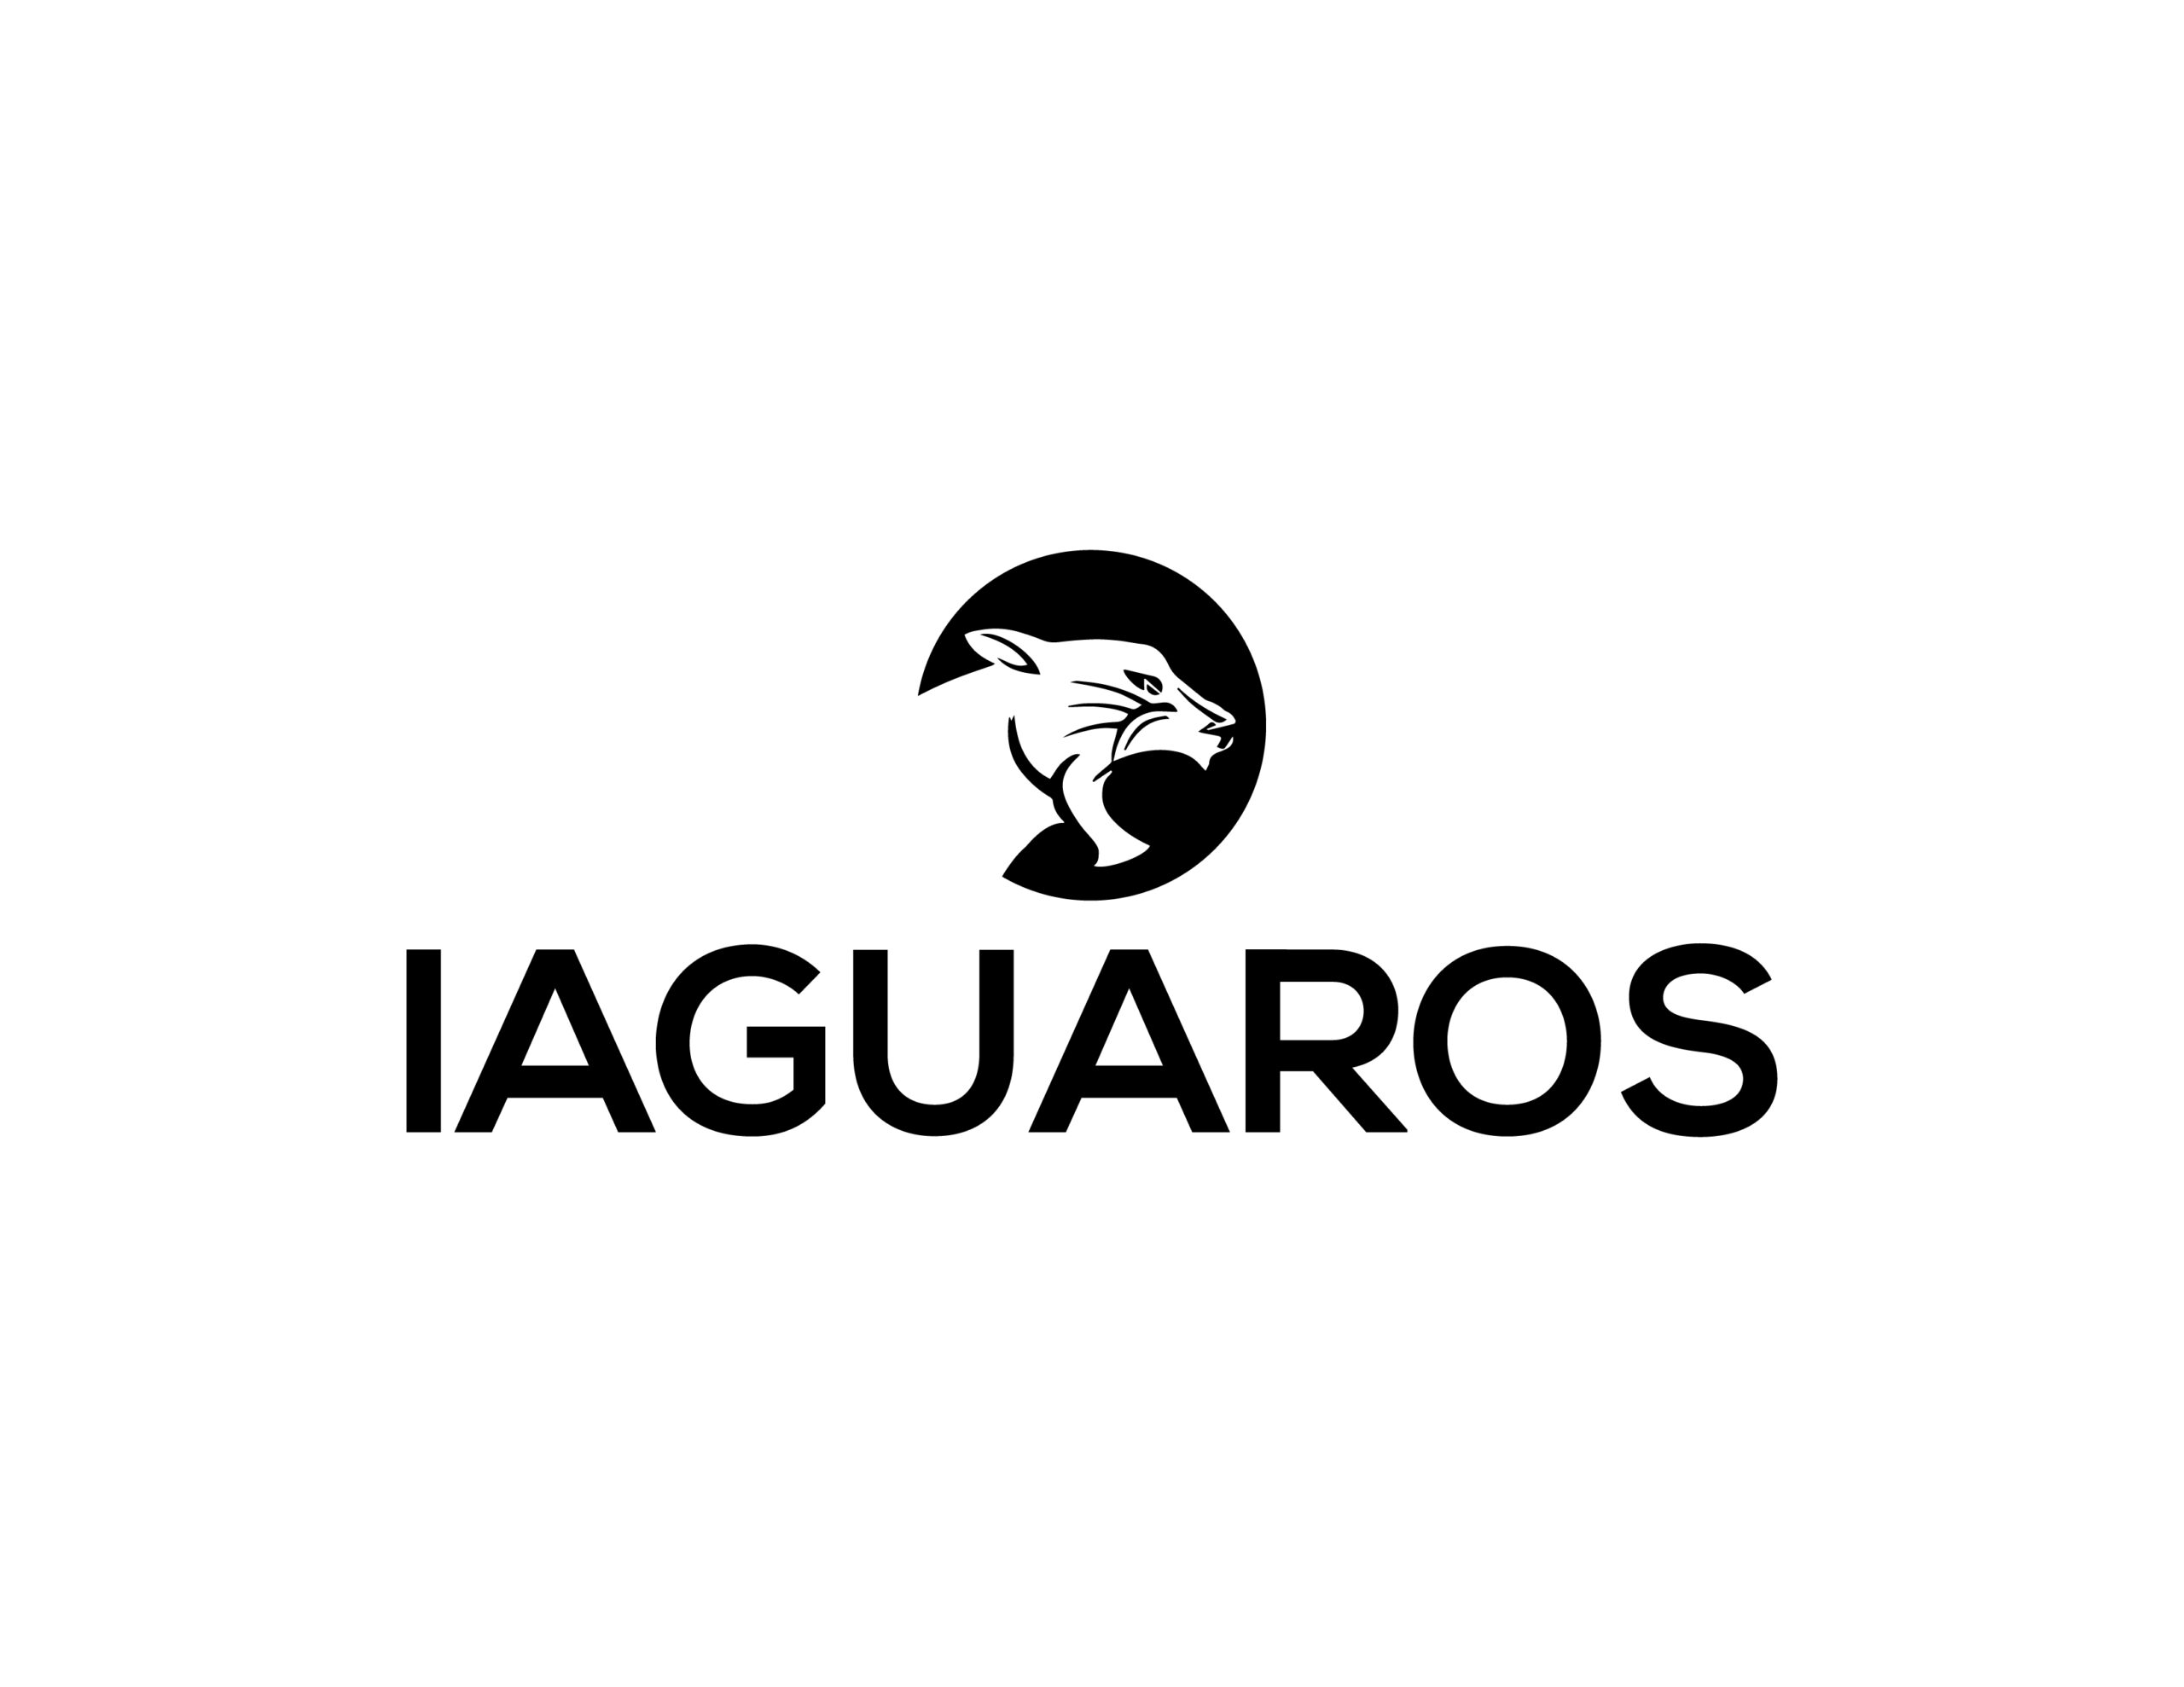 Echipamente outdoor si echipamente bushcraft iaguaros.ro logo